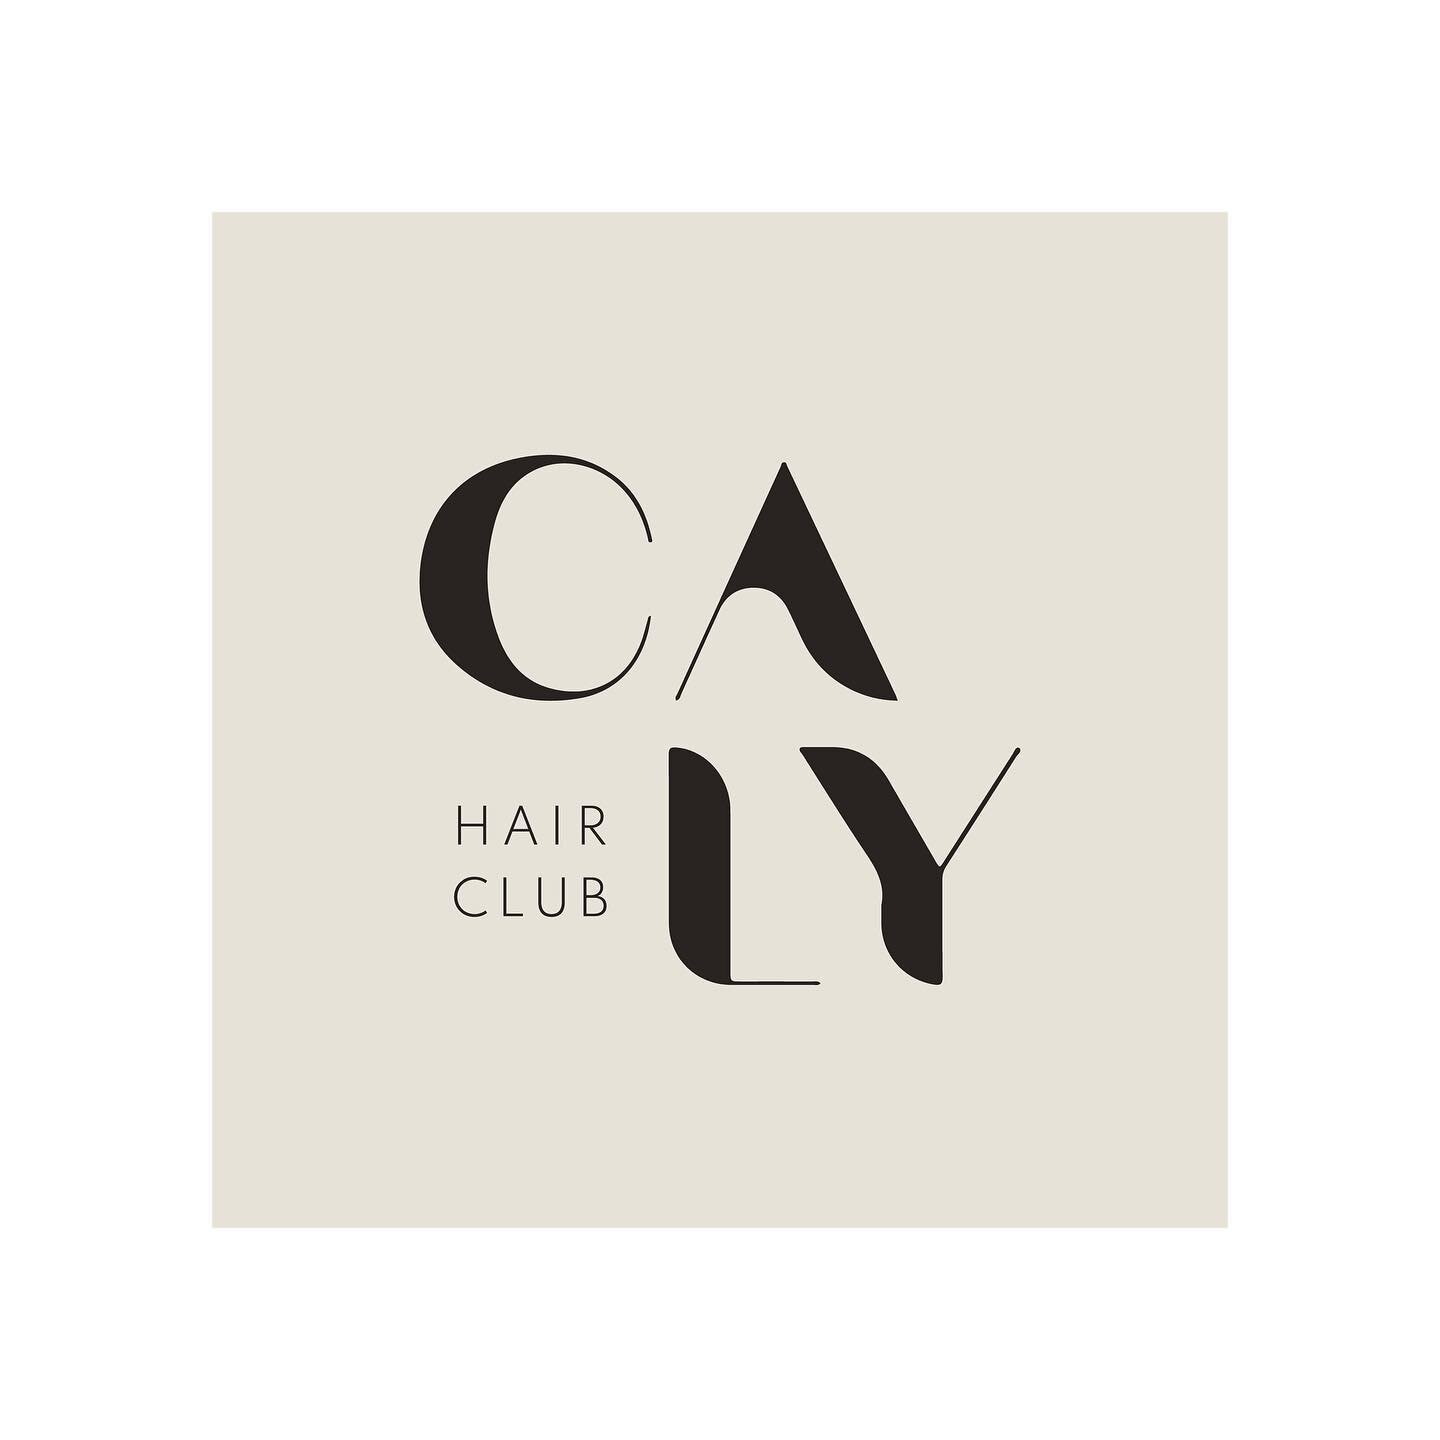 Logo work for @calywarner ✂️

#calyhairclub #logodesign #branding